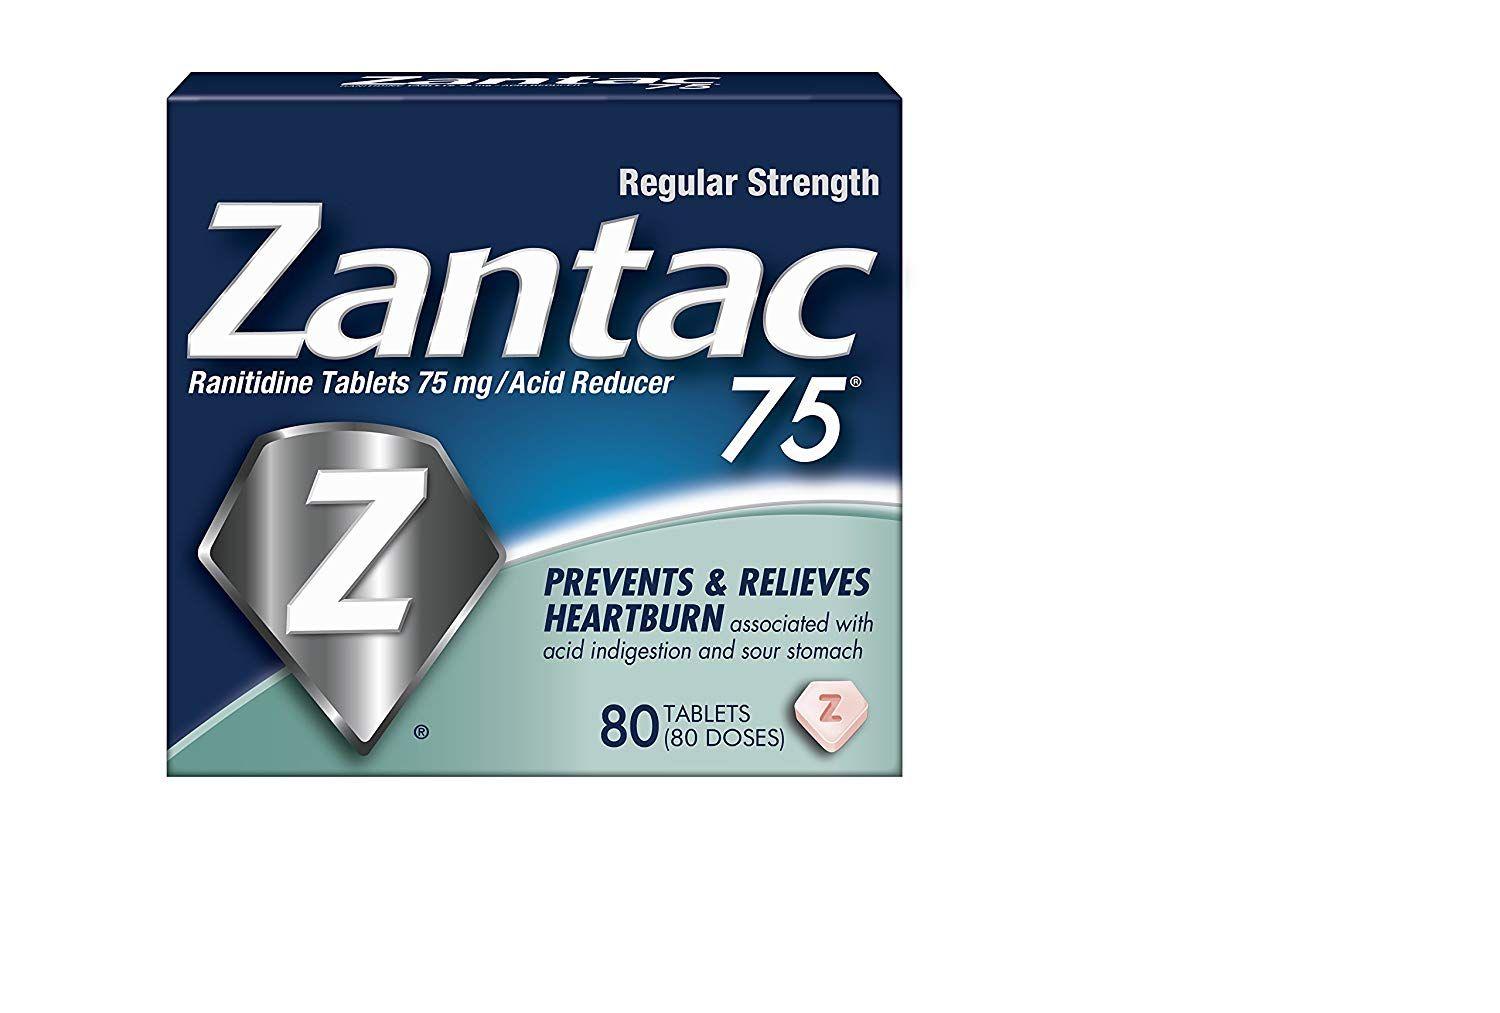 Zantac Logo - Amazon.com: Zantac 75 Acid Reducer Tablets-80 ct: Health & Personal Care